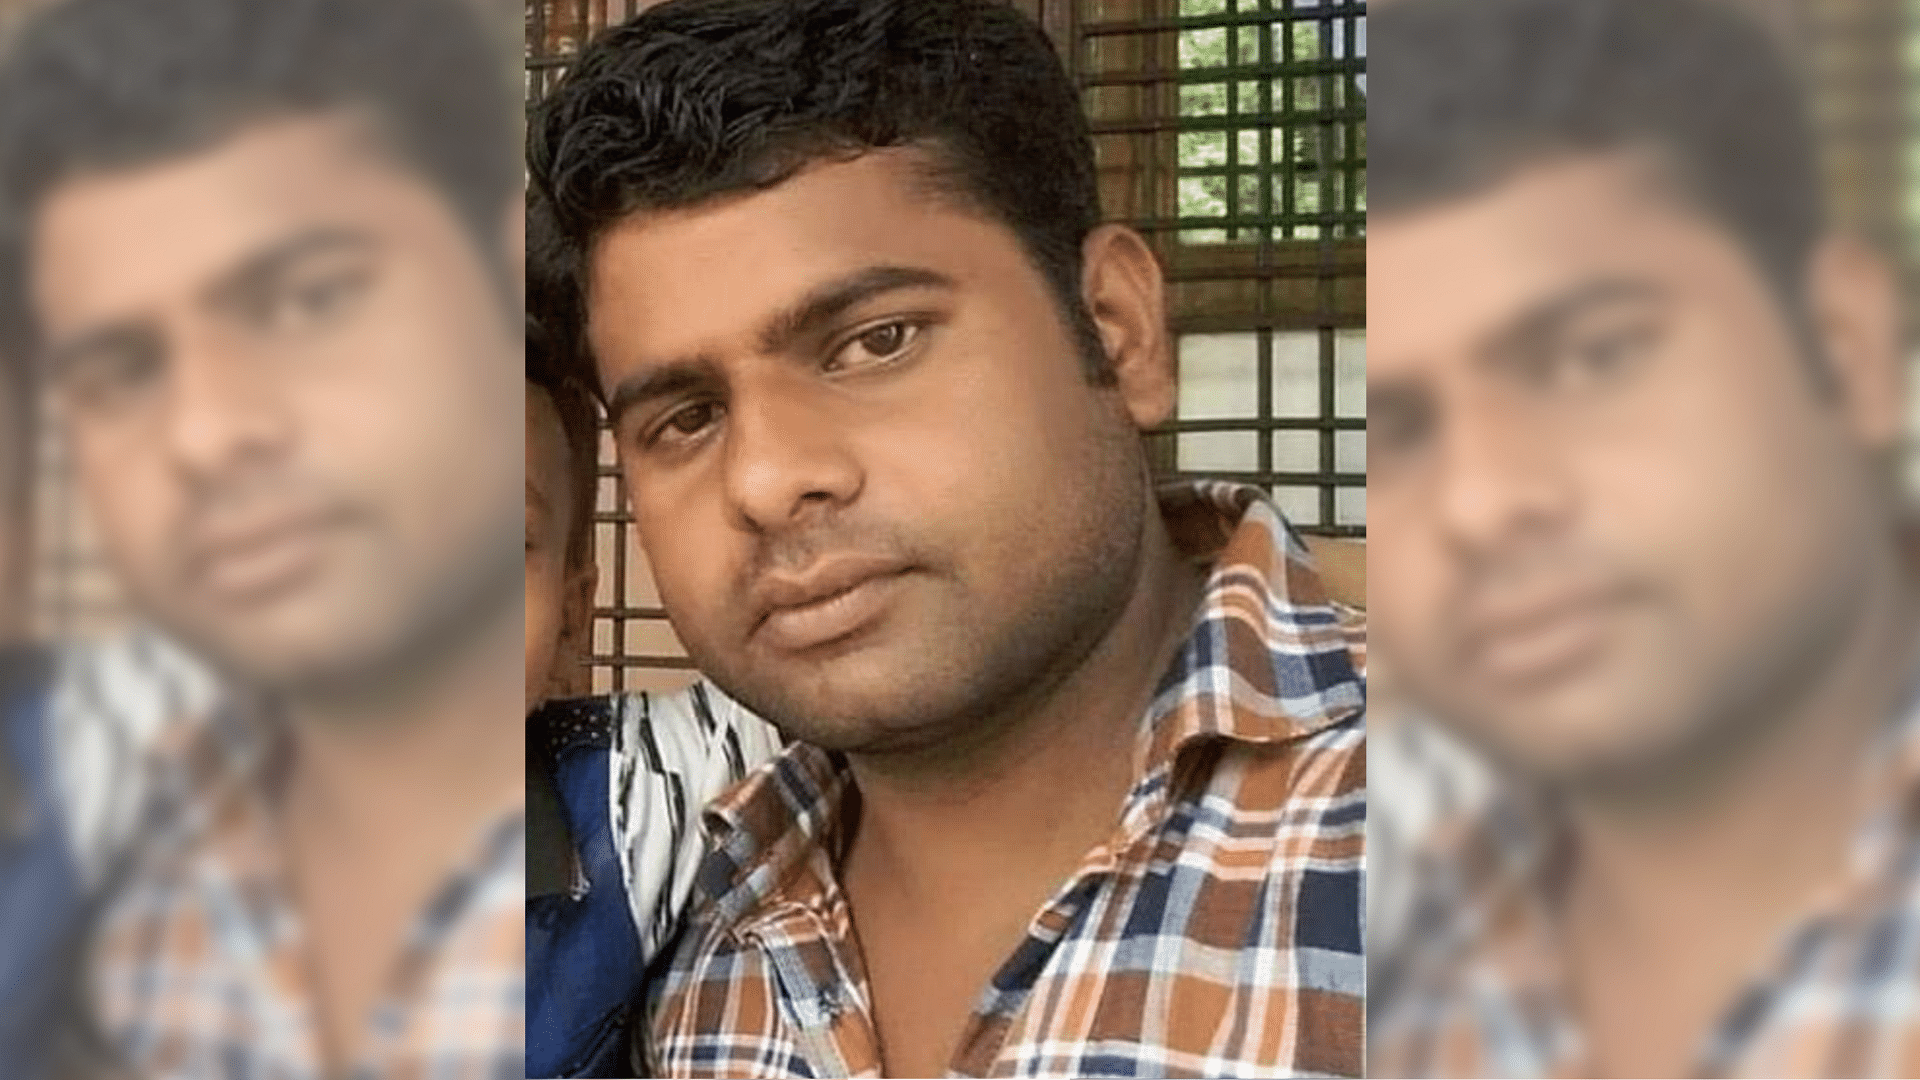 Pushpendra Yadav was allegedly killed in a police encounter on Sunday nightin Jhansi.